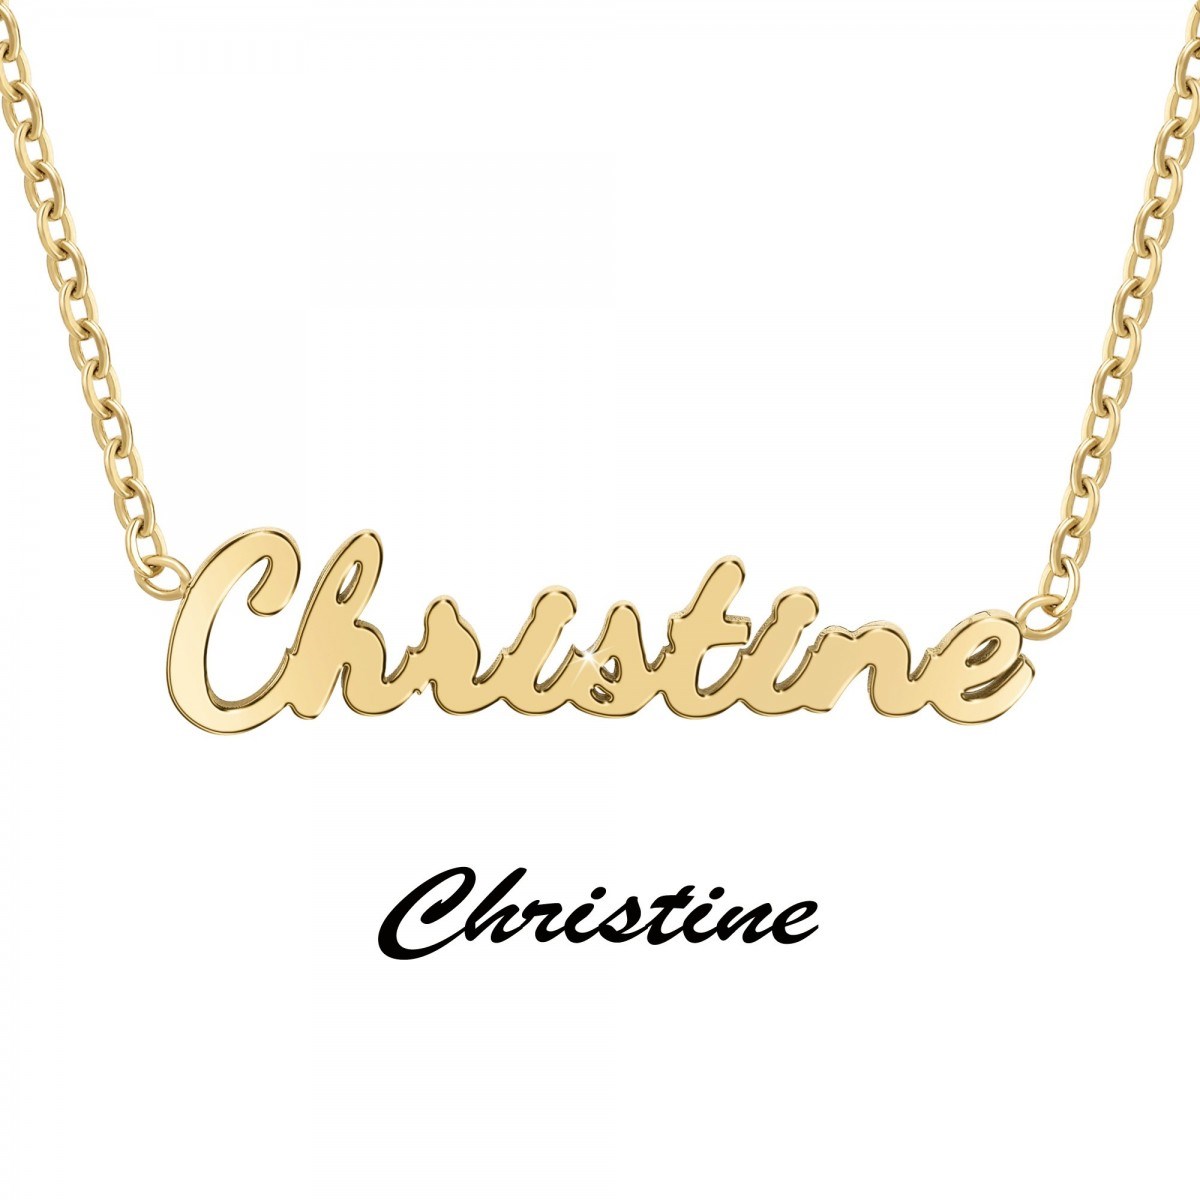 Christine - Collier prénom - vue 3